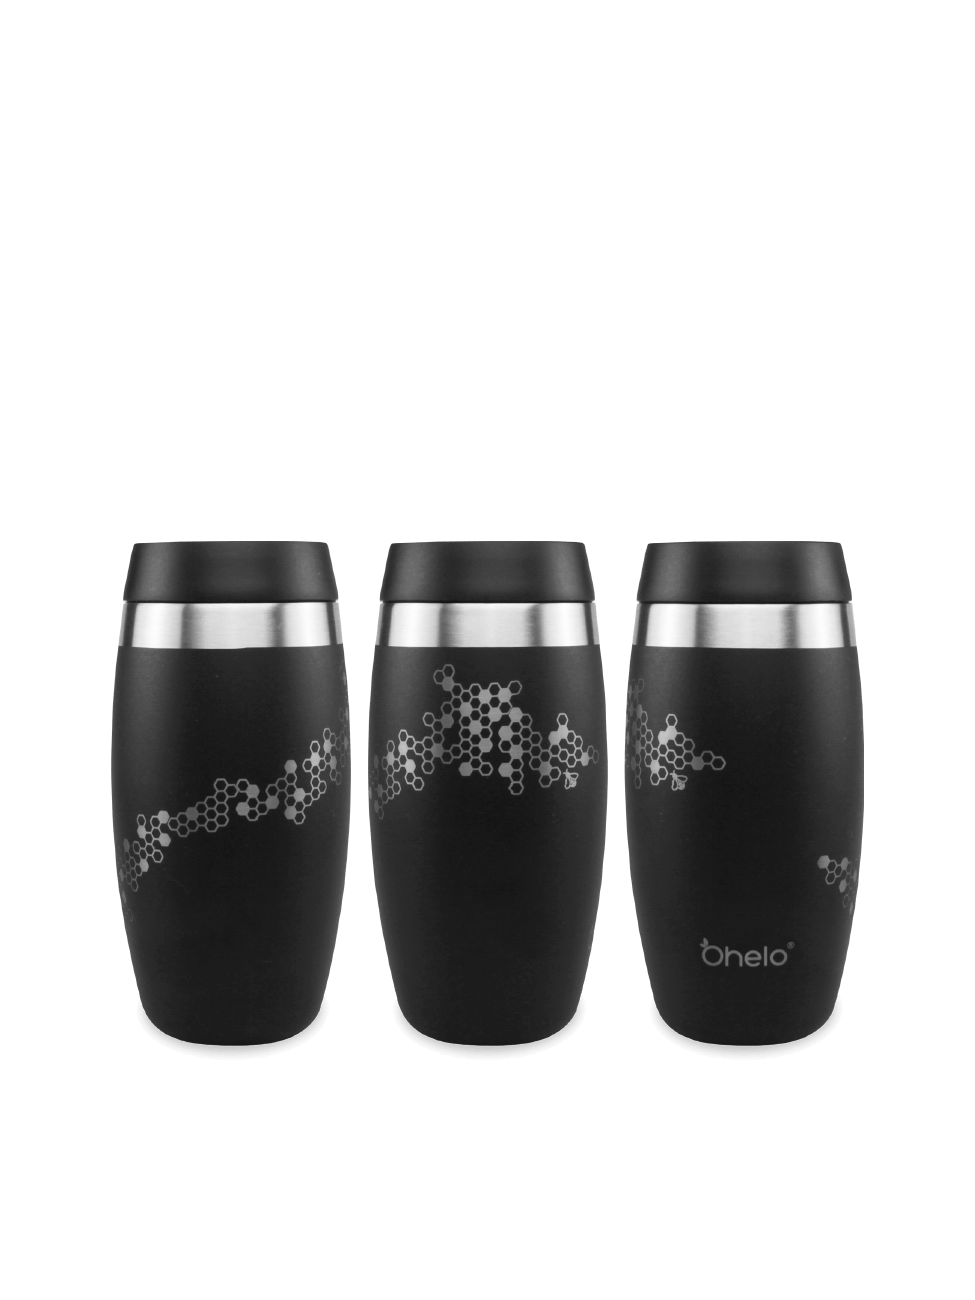 Ohelo black travel mug in bee design - image showing design from 3 sides